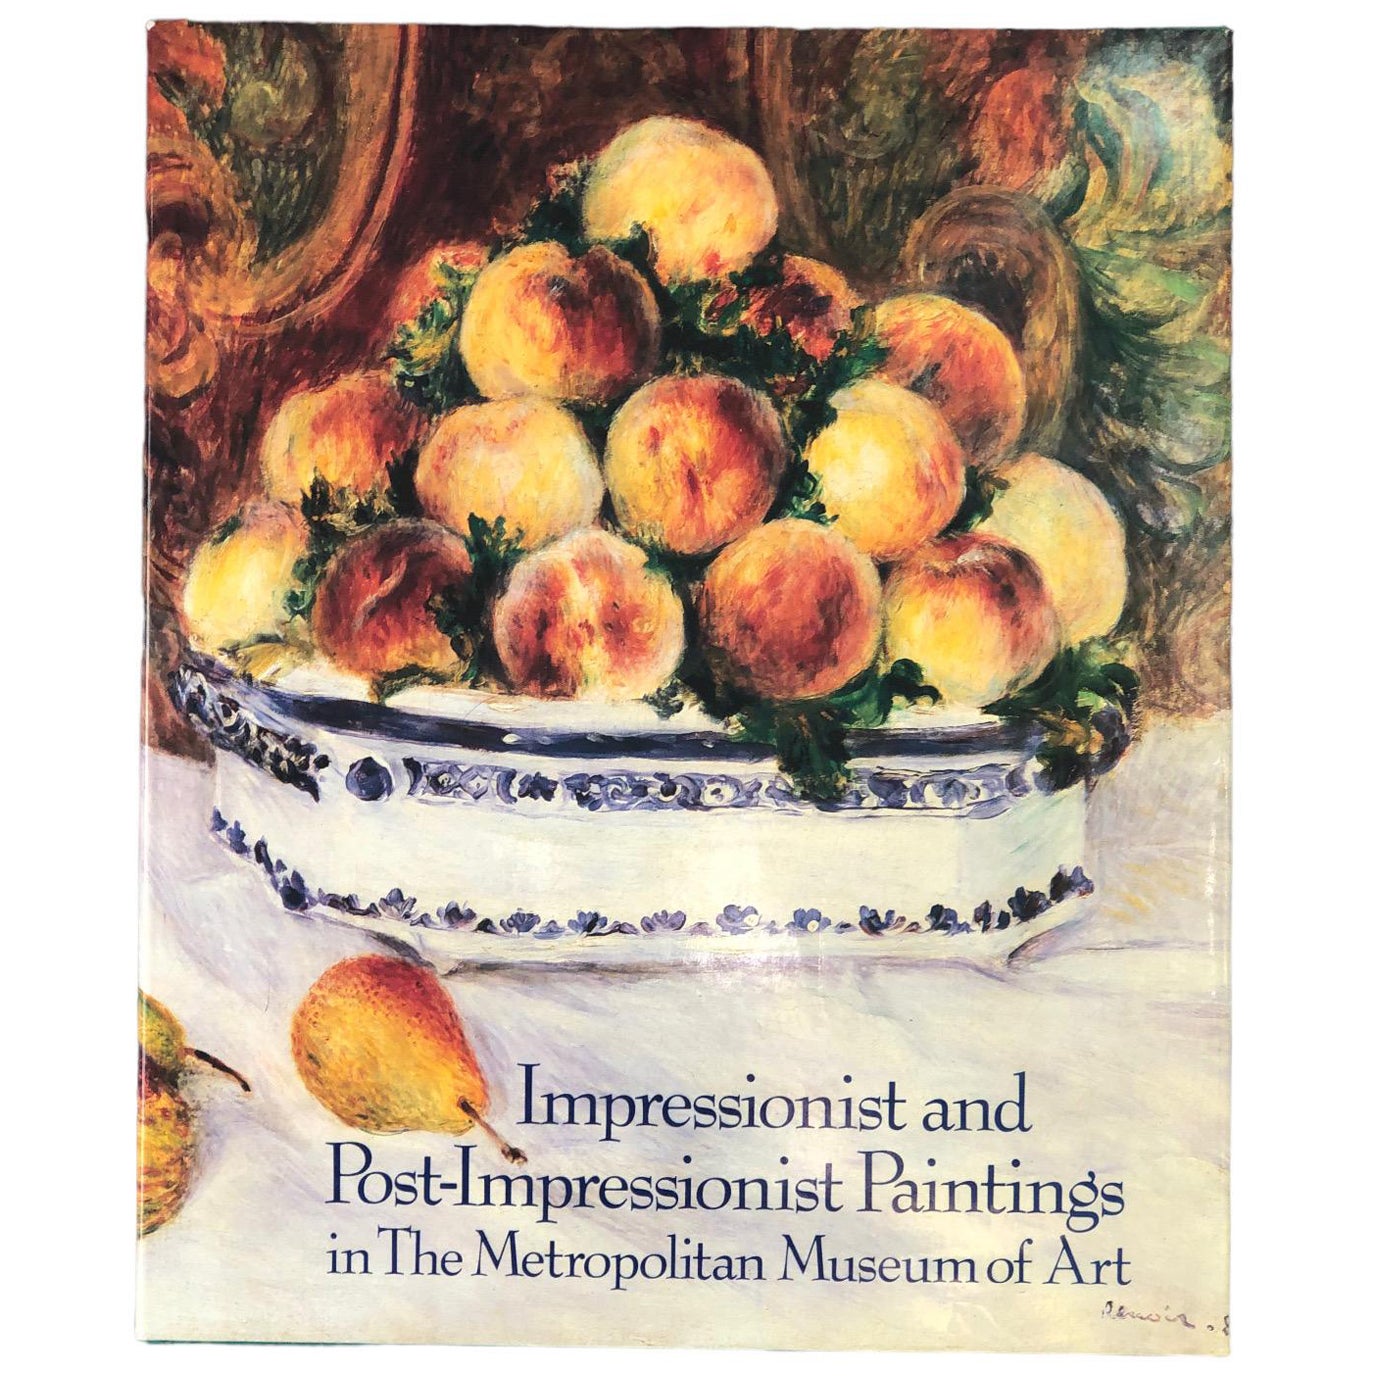 Peintures impressionnistes et post-impressionnistes du Metropolitan Museum of Art